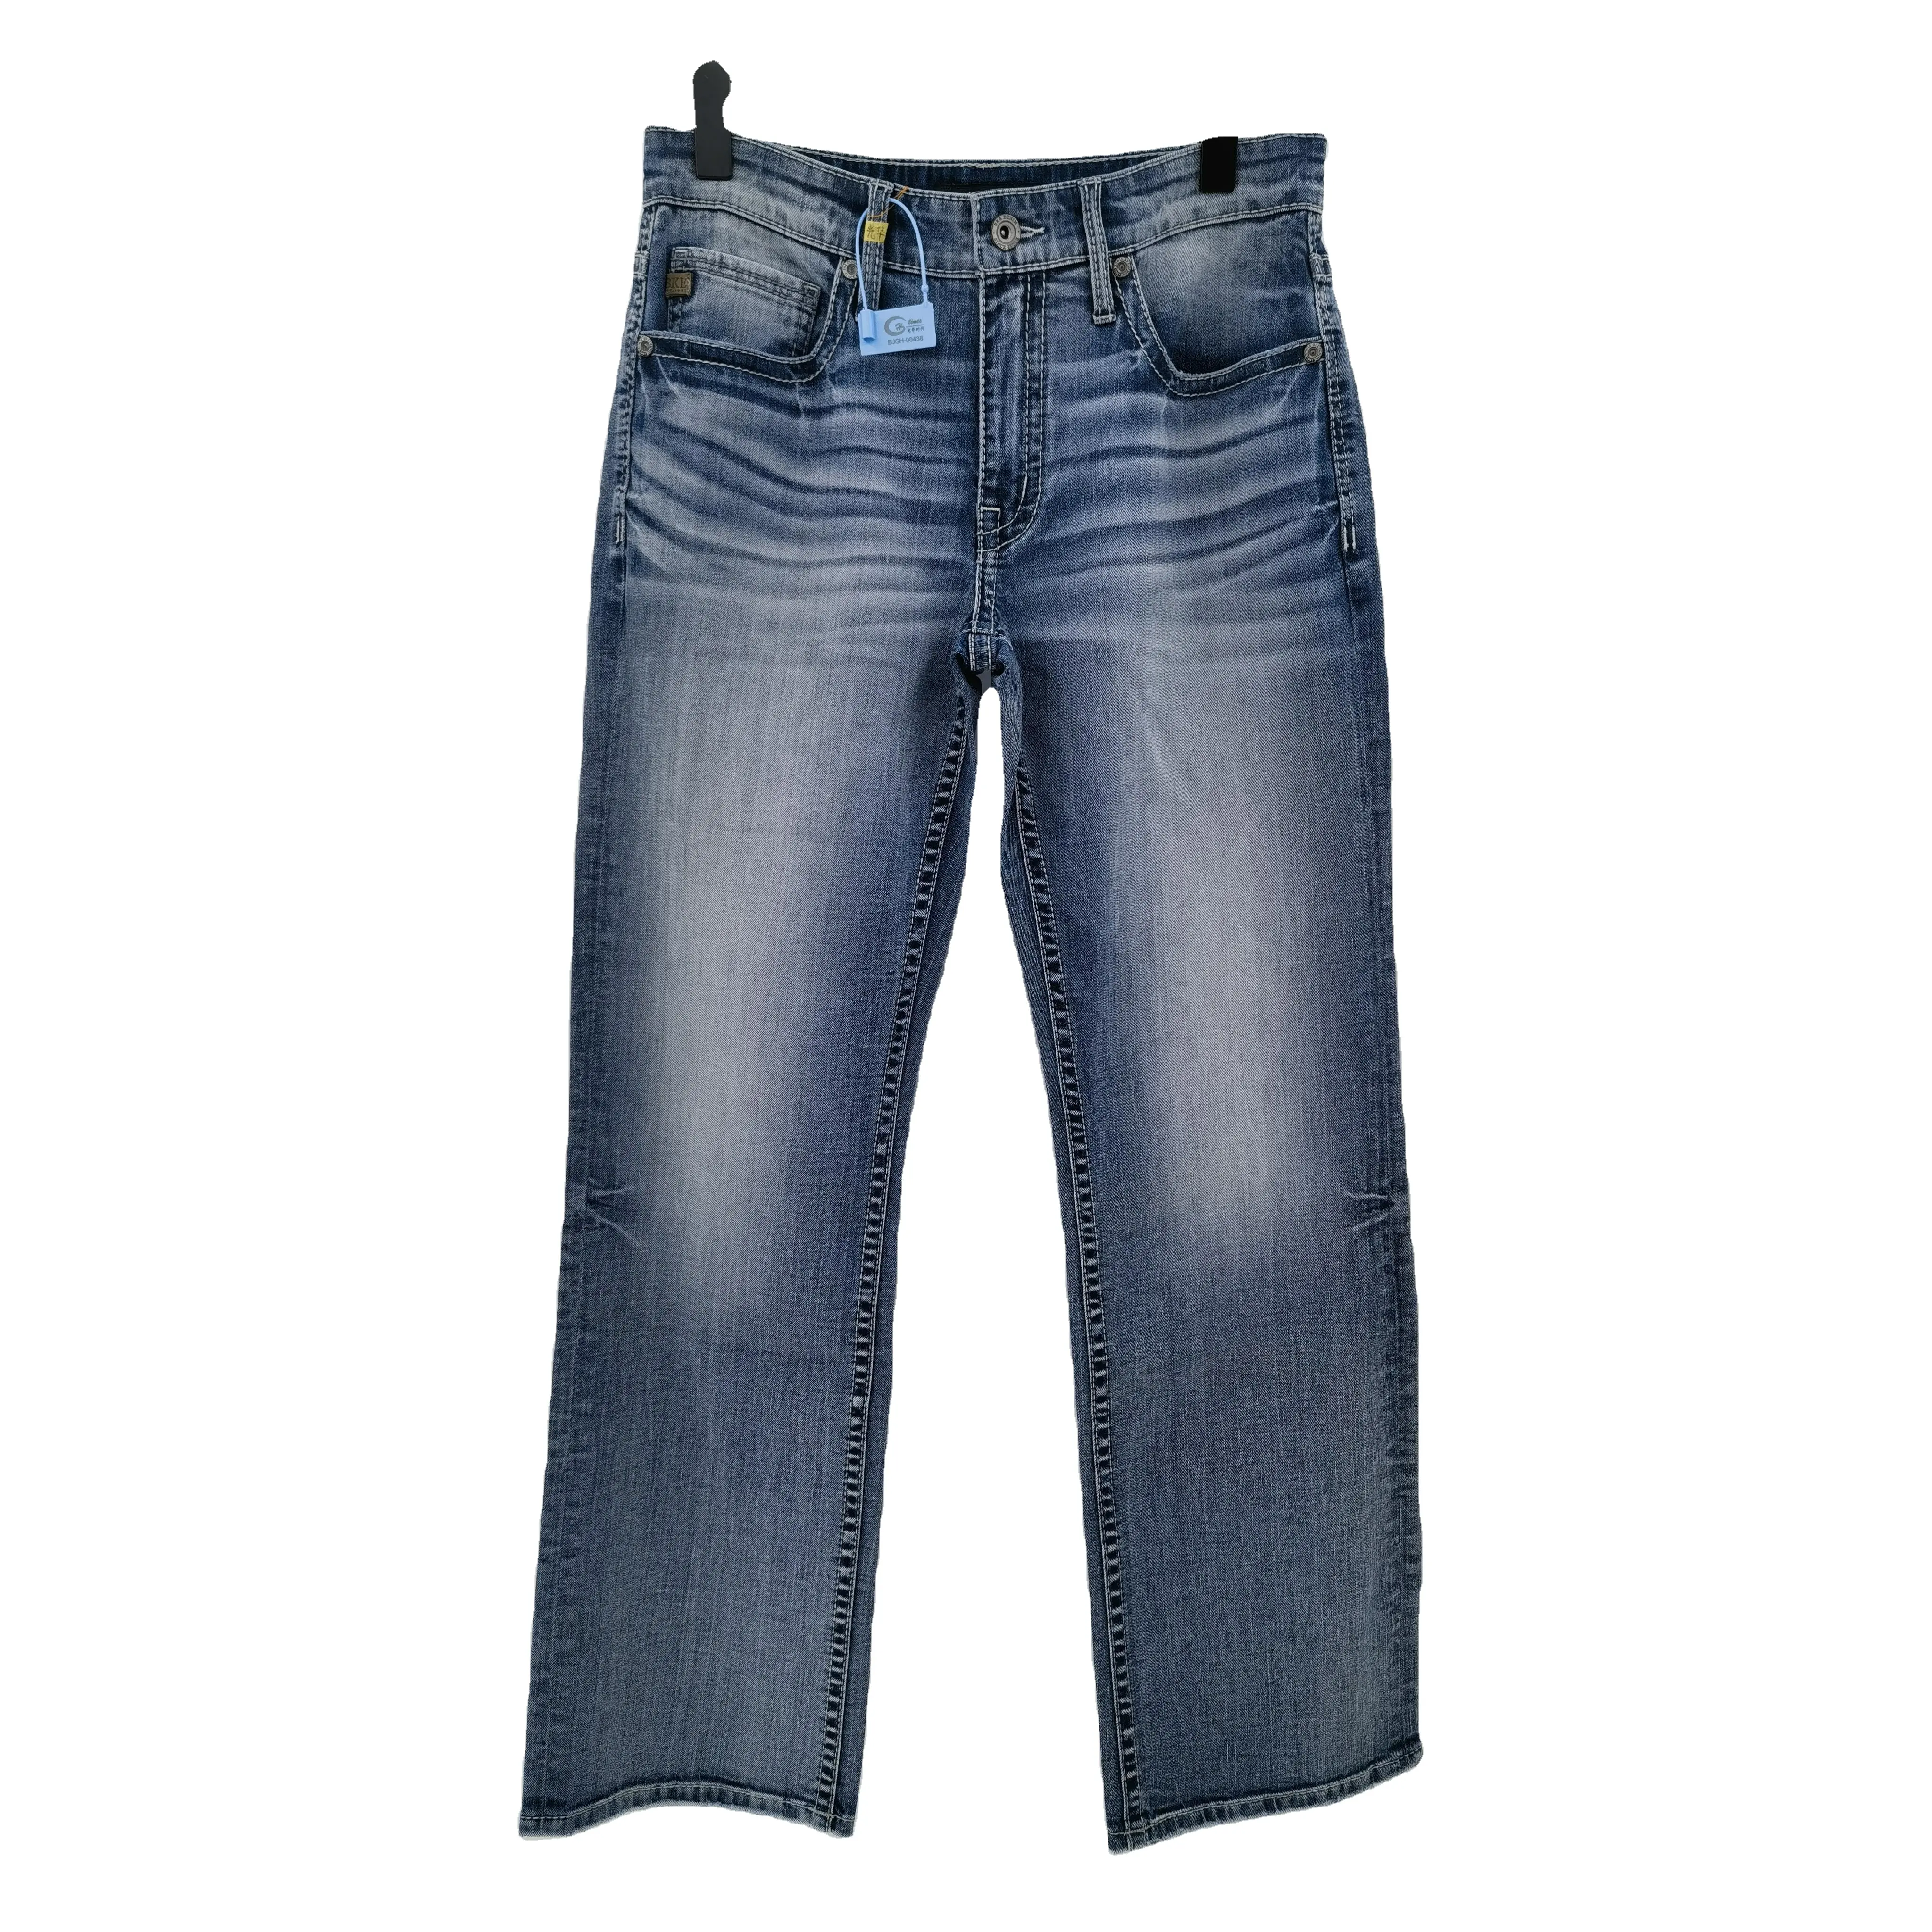 creme skinny denim jeans for women plus size women's one piece sublimated chic clothing 2023 jeans dresses jumpsuit